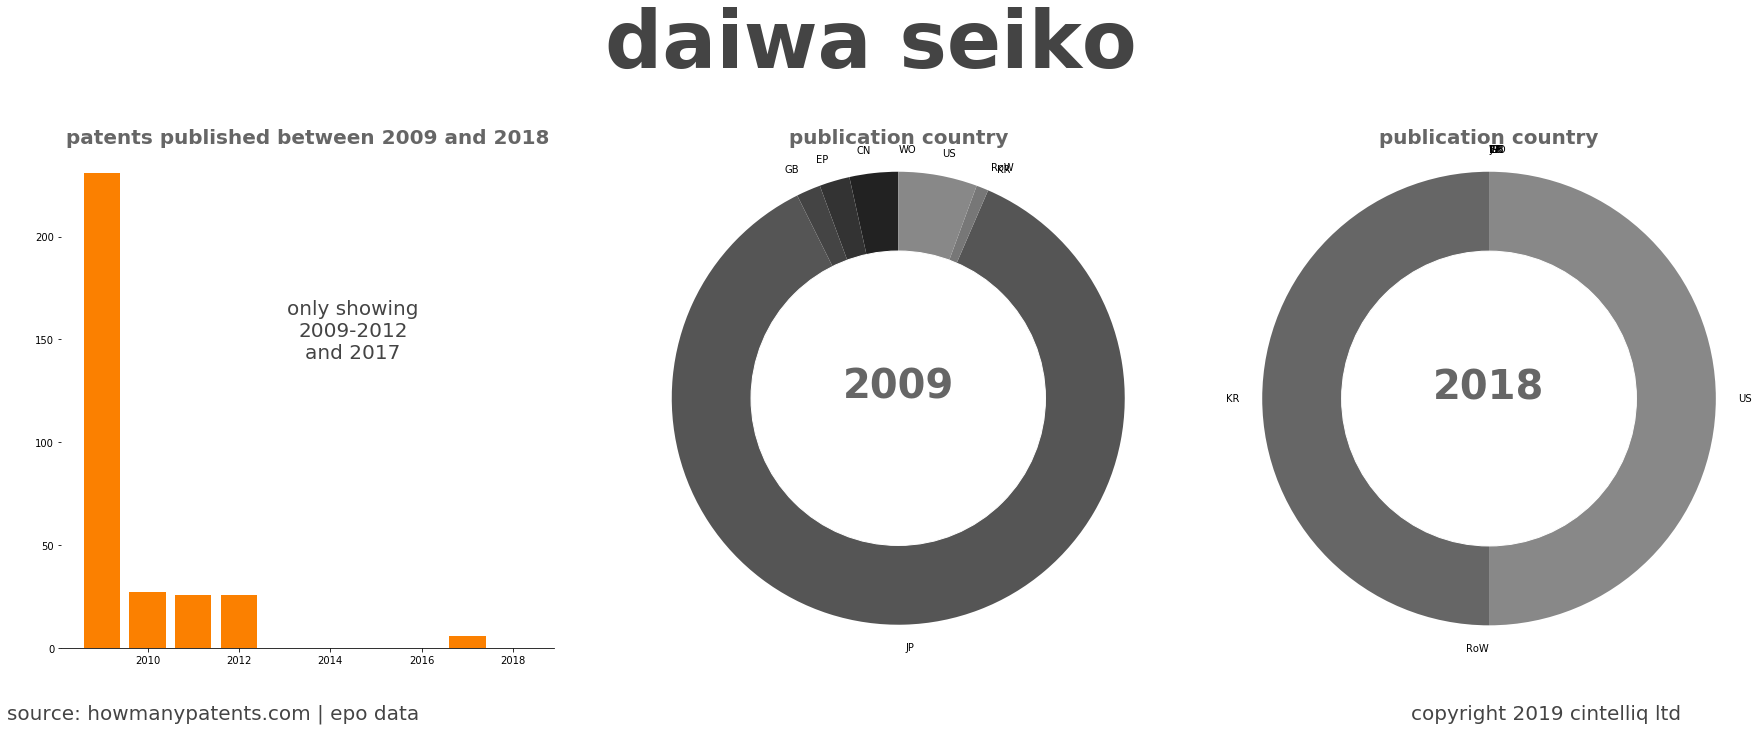 summary of patents for Daiwa Seiko